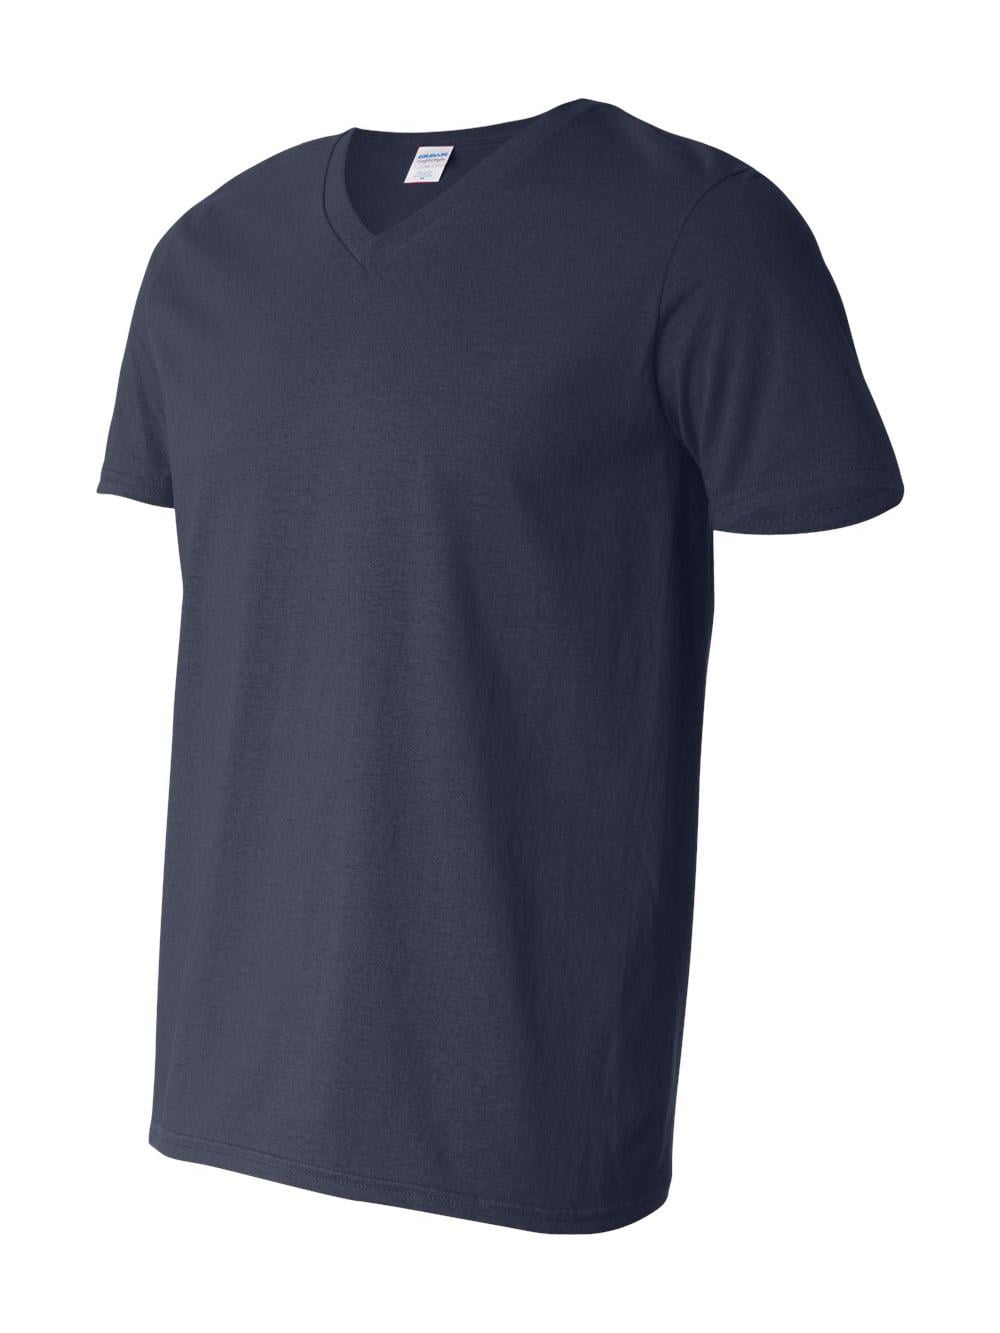 Gildan - Softstyle V-Neck T-Shirt - 64V00 - Navy - Size: 2XL - Walmart.com